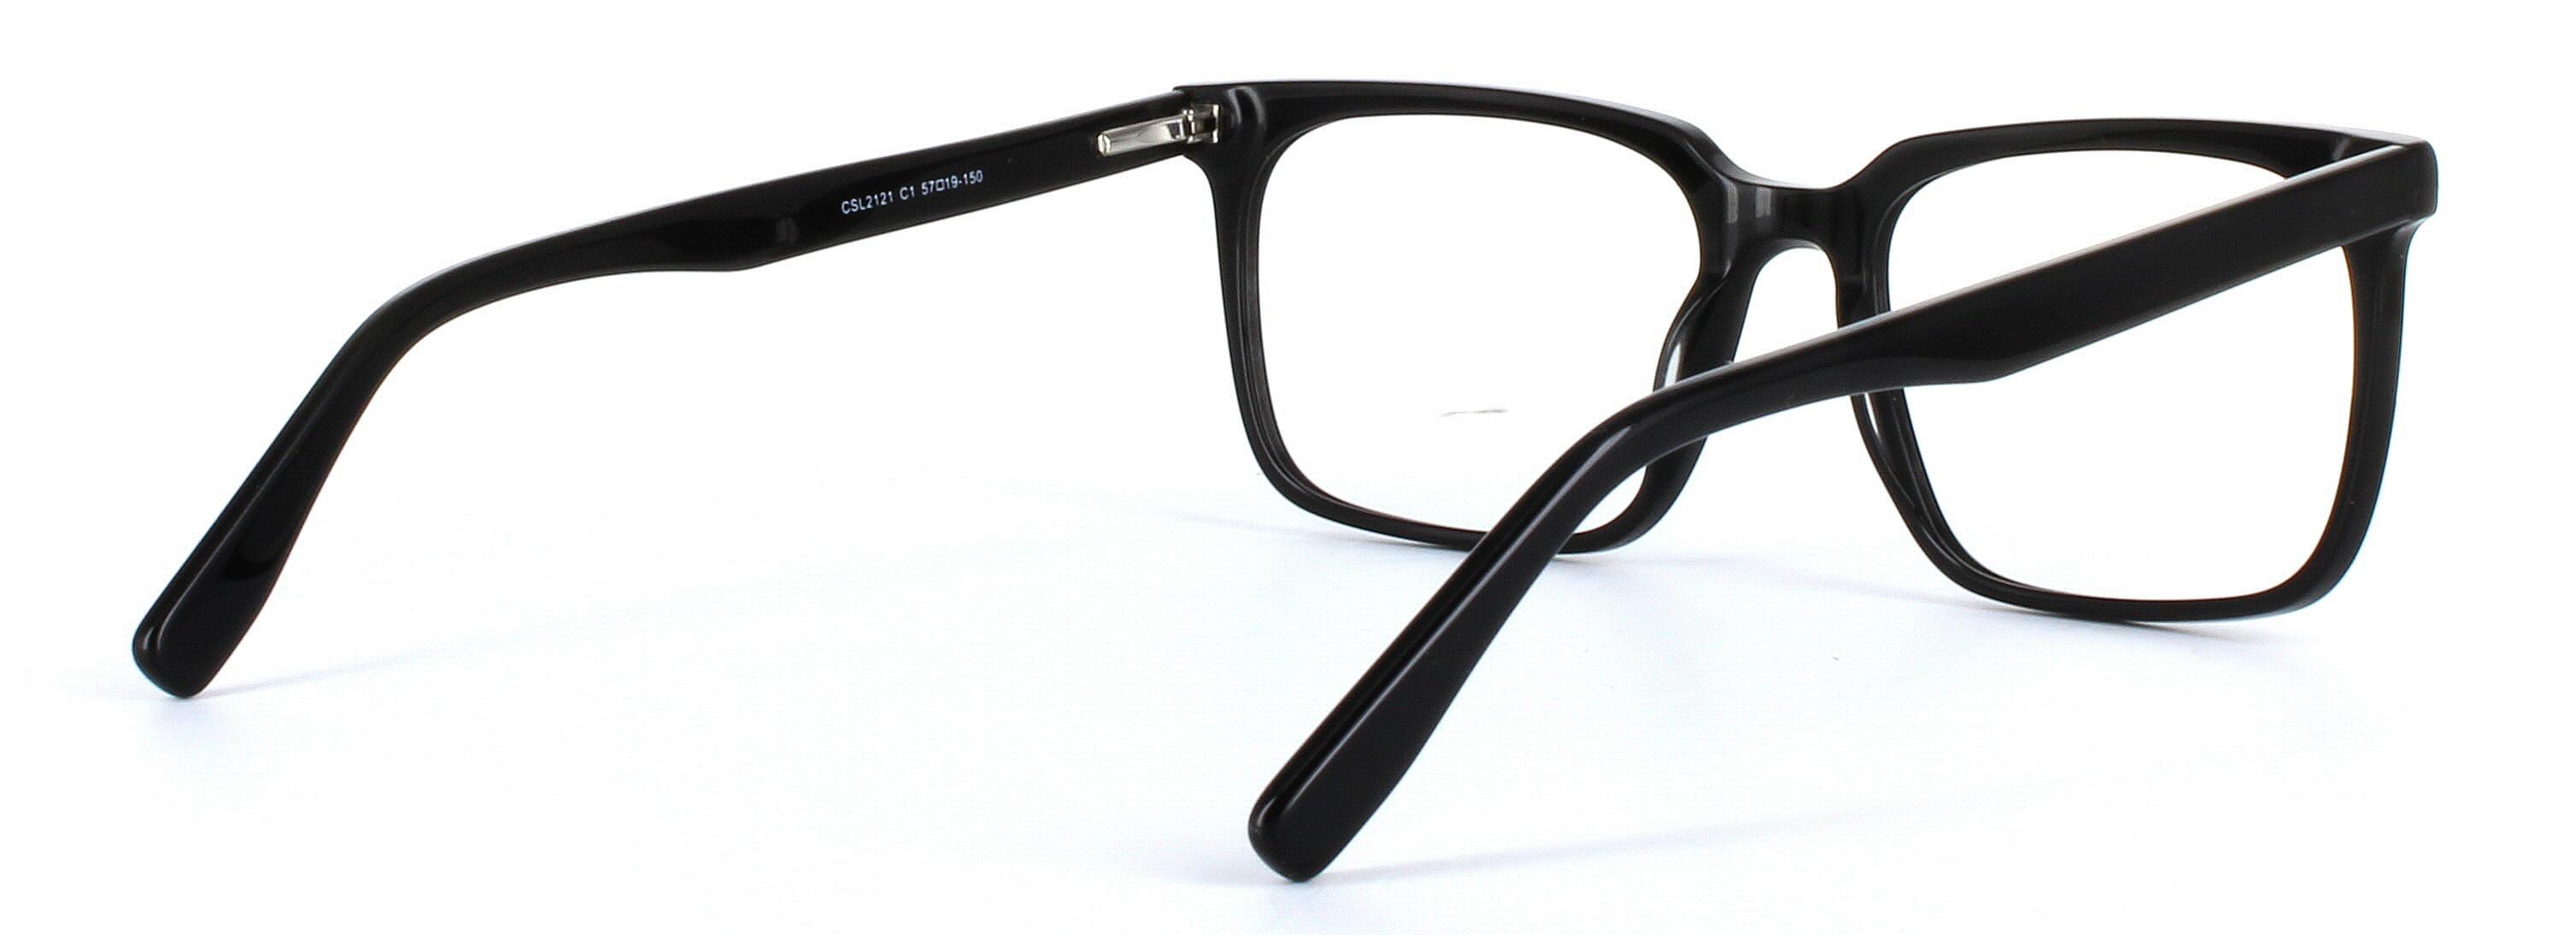 Men's re3ctangular large black acetate glasses - image 4